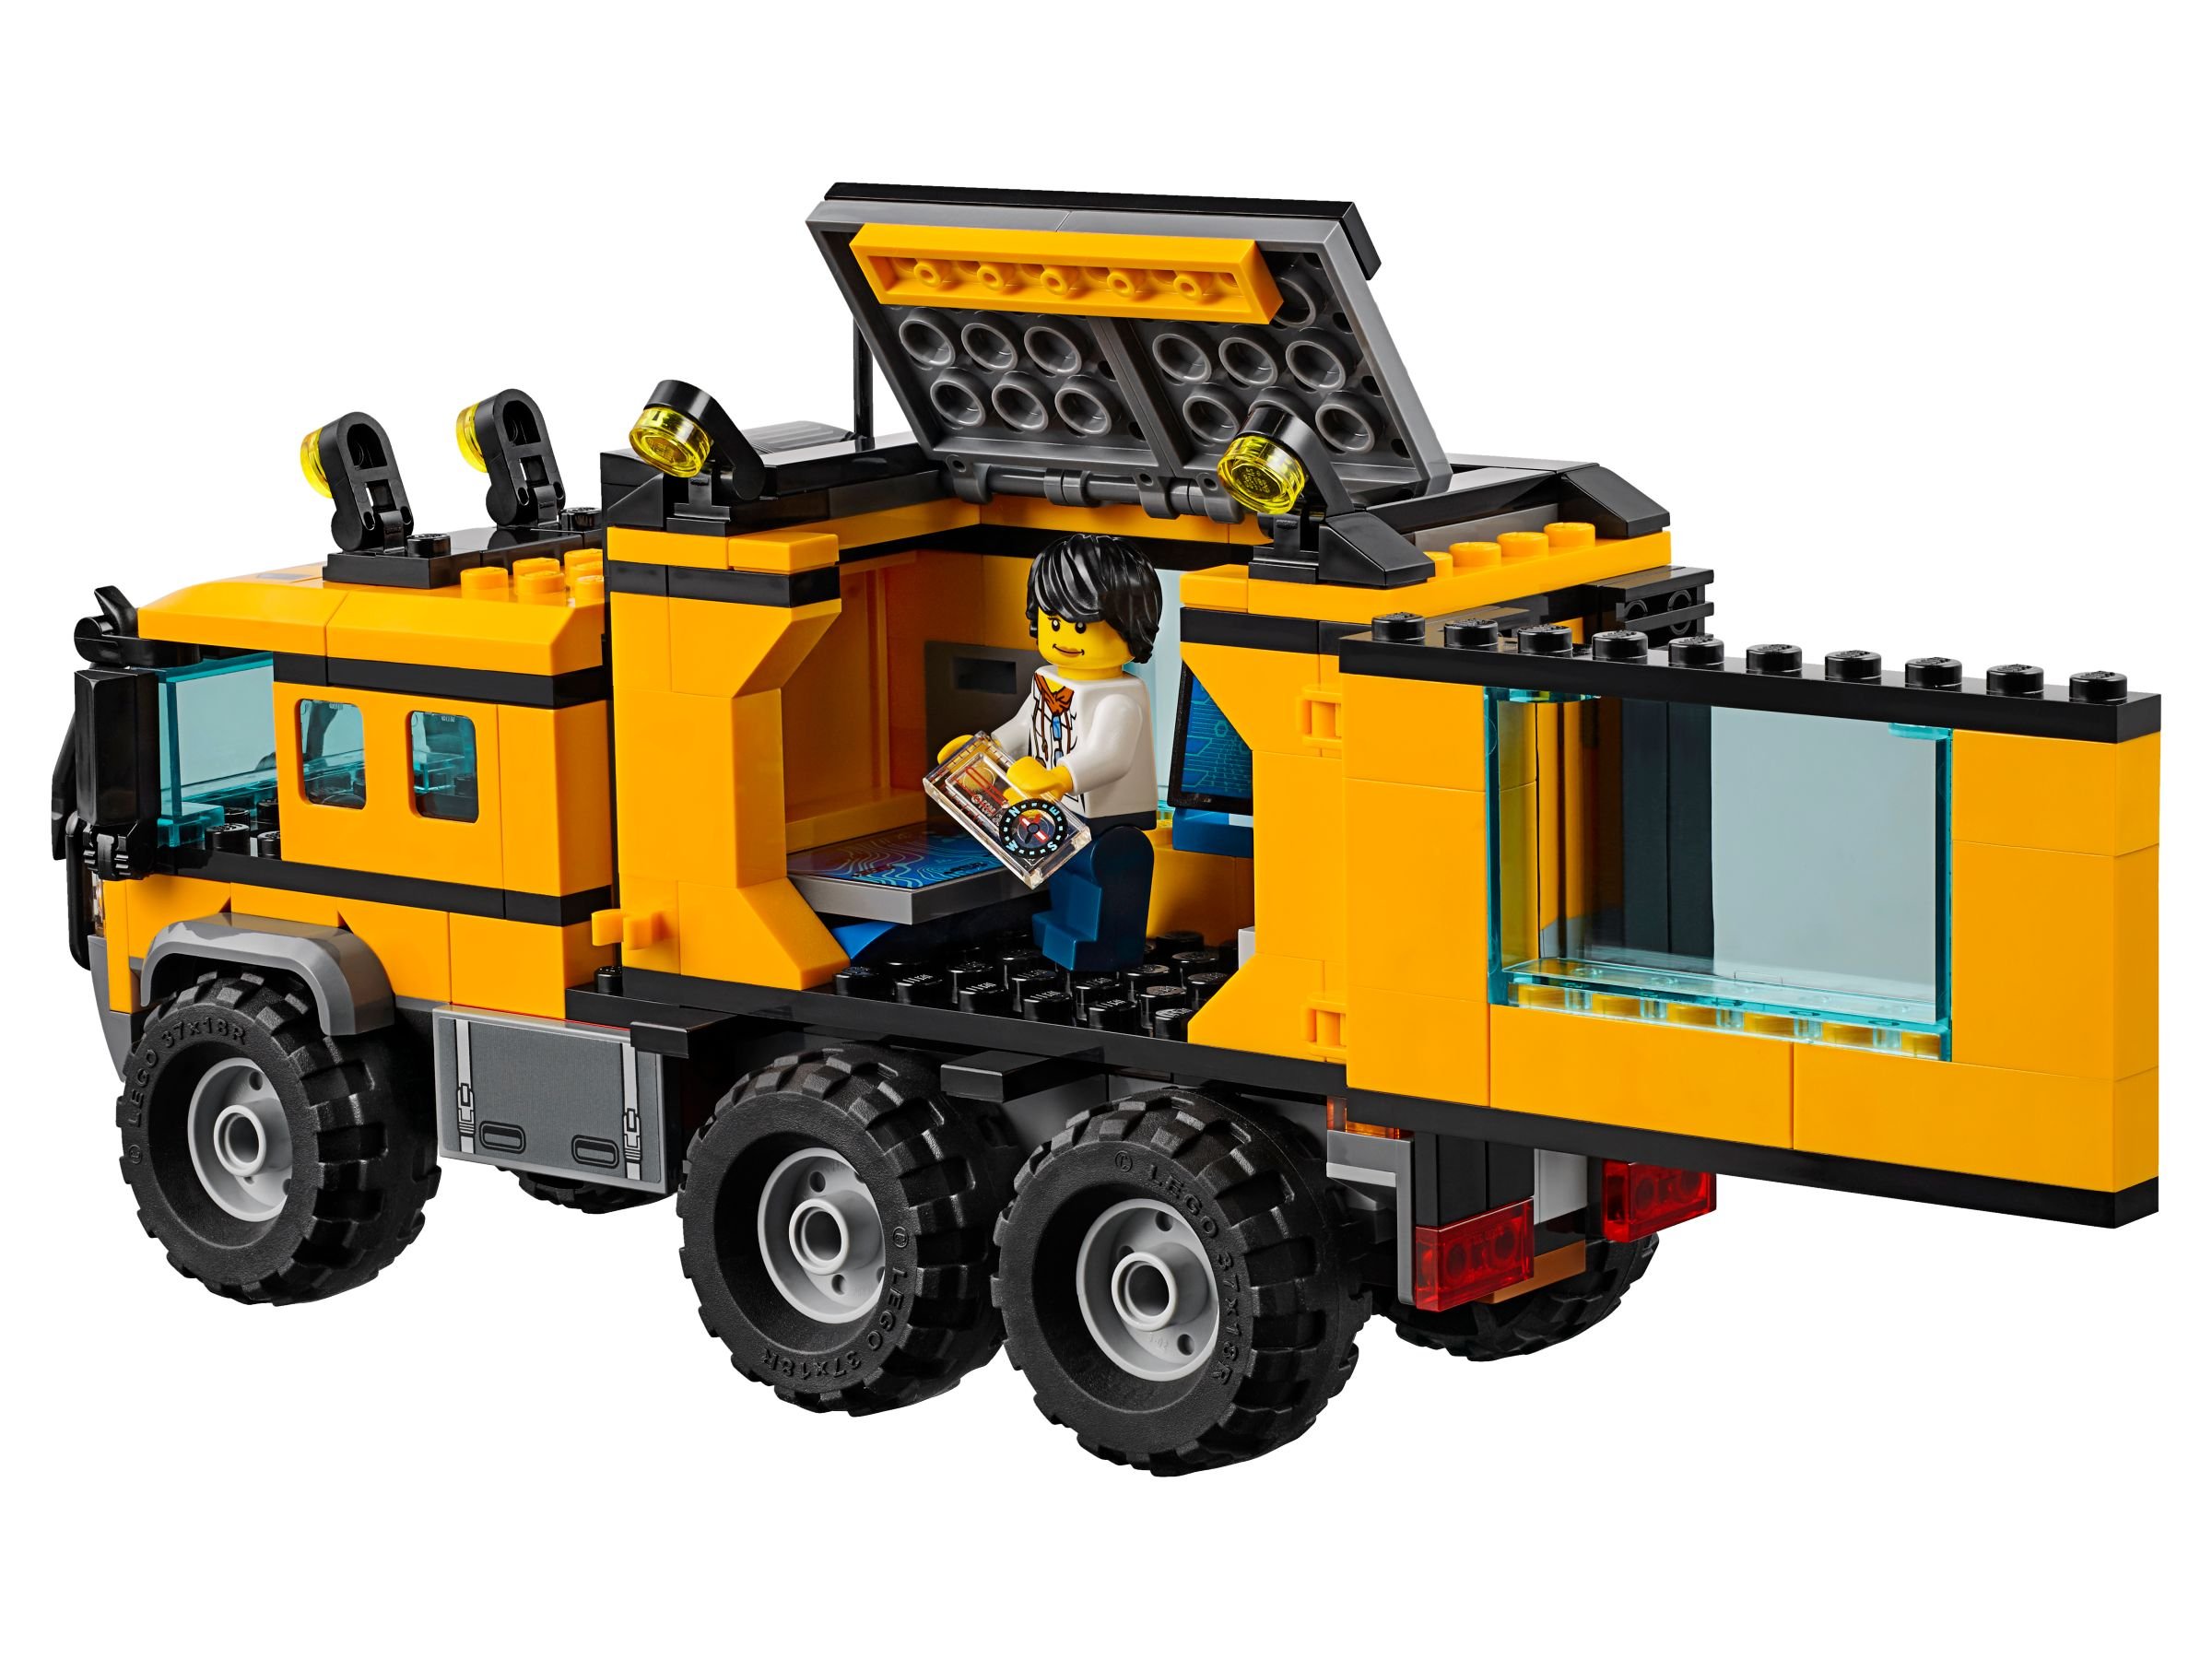 LEGO City 60160 Mobiles Dschungel-Labor LEGO_60160_alt3.jpg